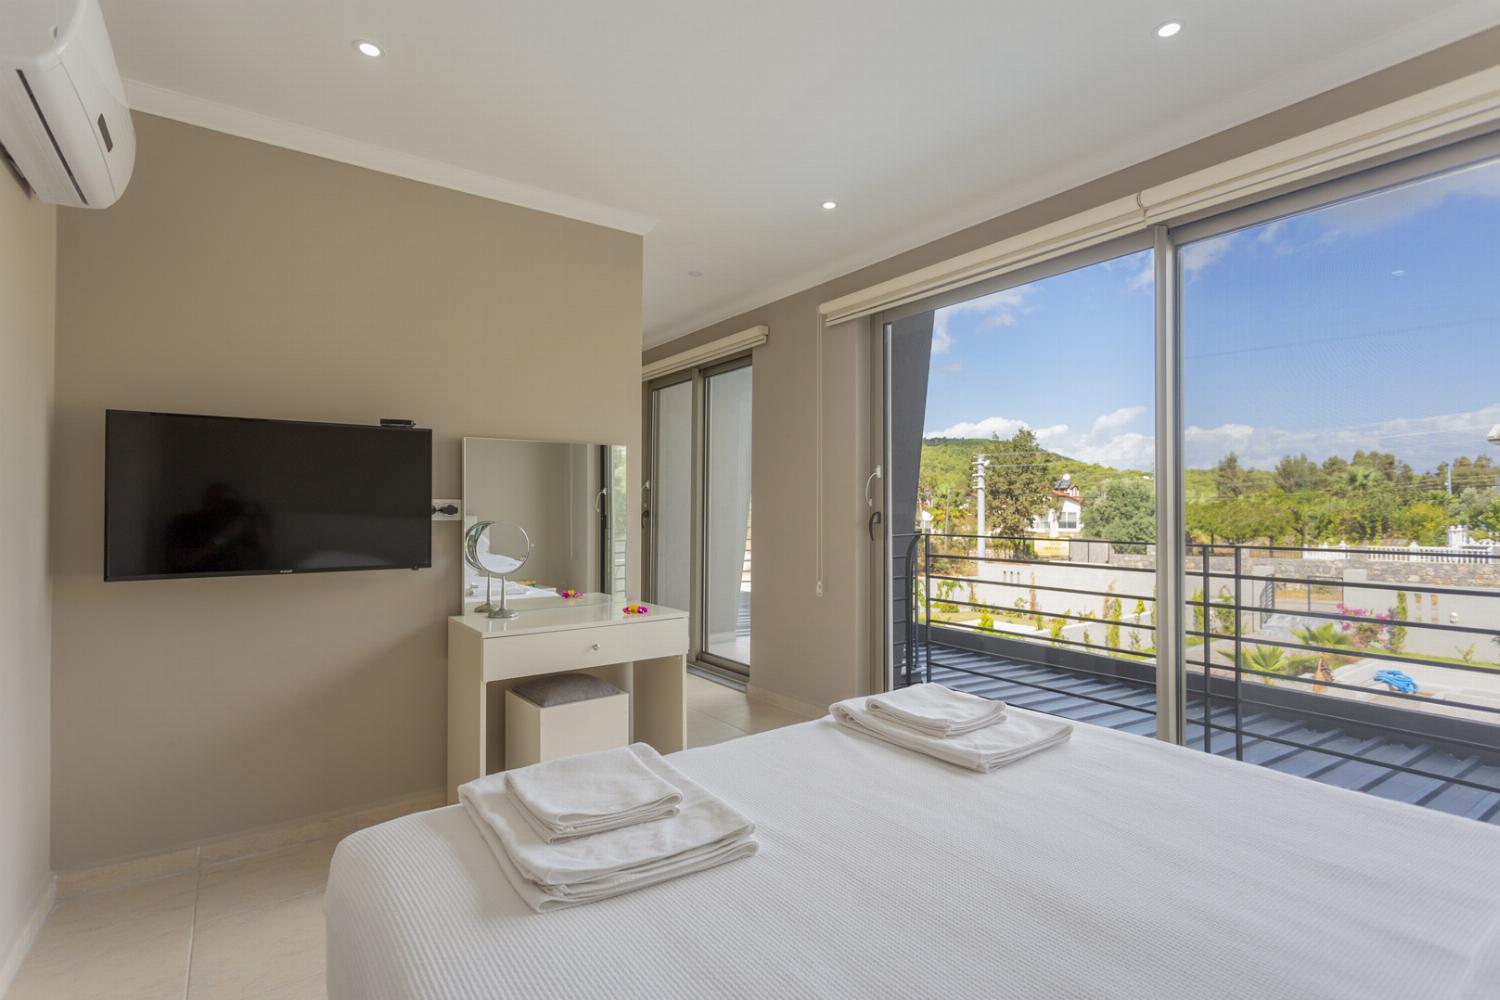 Double bedroom with en suite bathroom  tv and upper terrace access